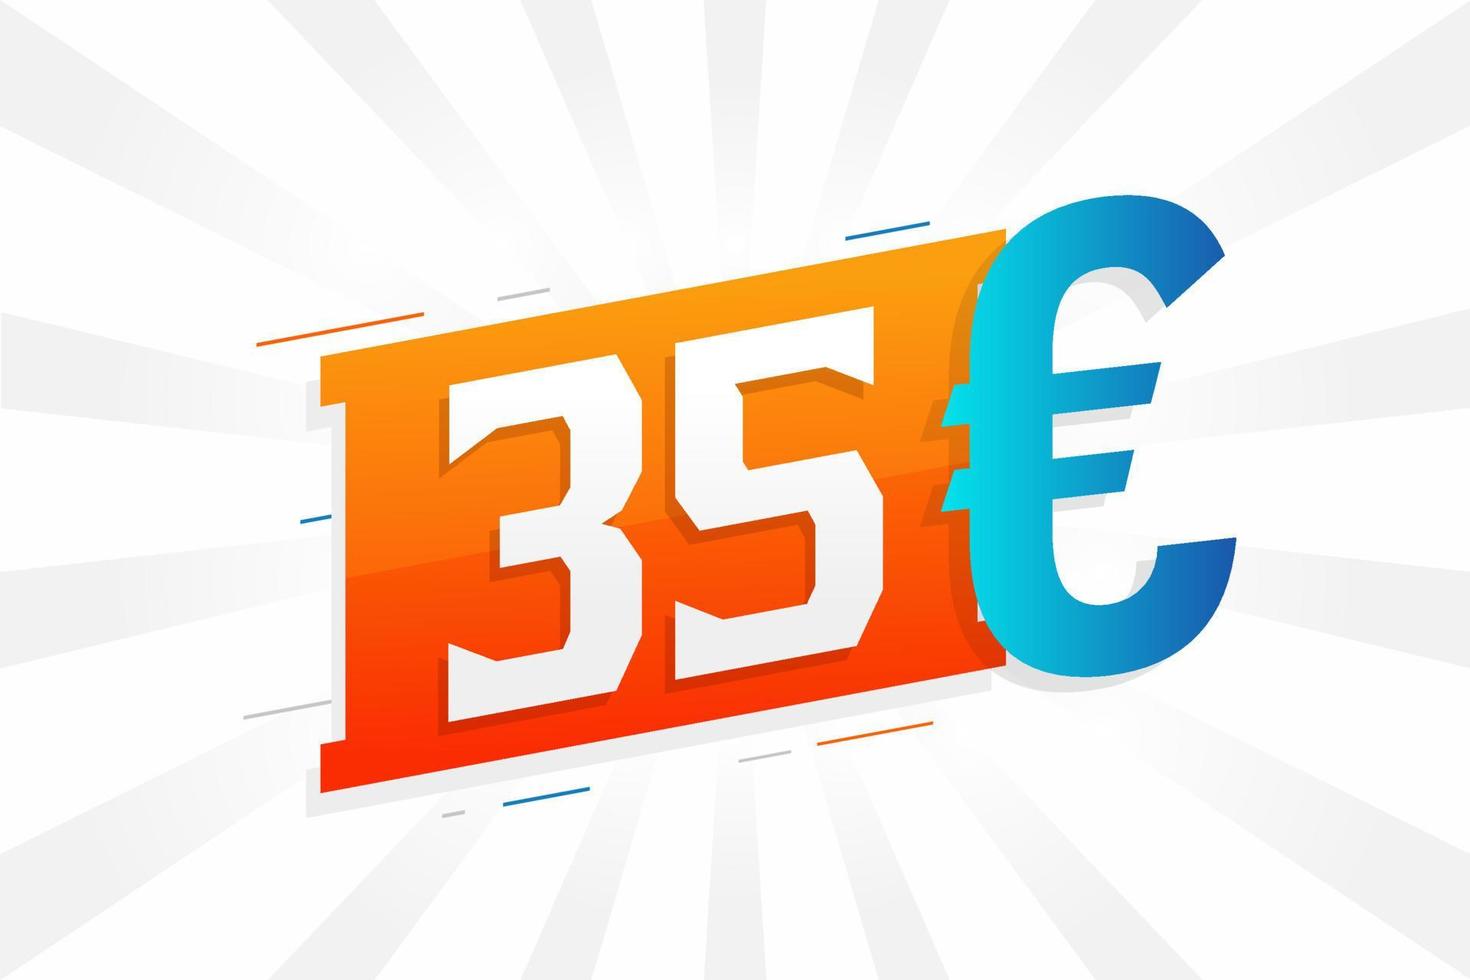 Símbolo de texto vectorial de moneda de 35 euros. Vector de stock de dinero de la unión europea de 35 euros